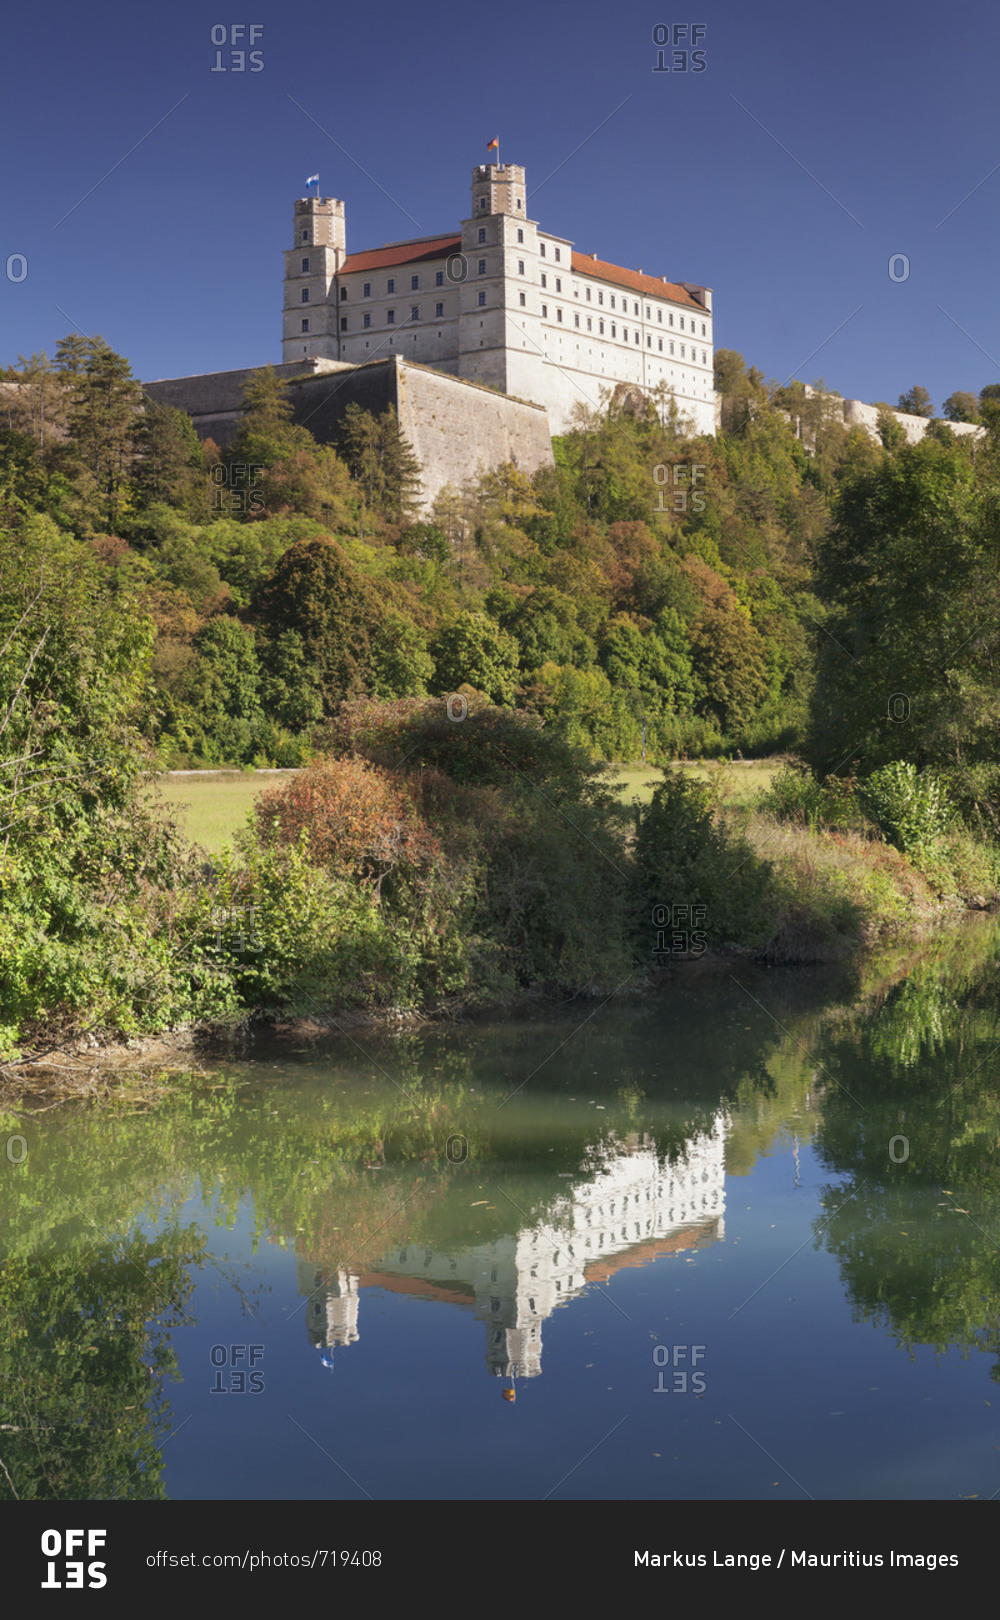 Willibaldsburg (spur castle) is reflected at the Altmuehl, nature reserve Altmuehl valley, Eichstatt, Altmuehl valley, Upper Bavaria, Bavarians, Germany